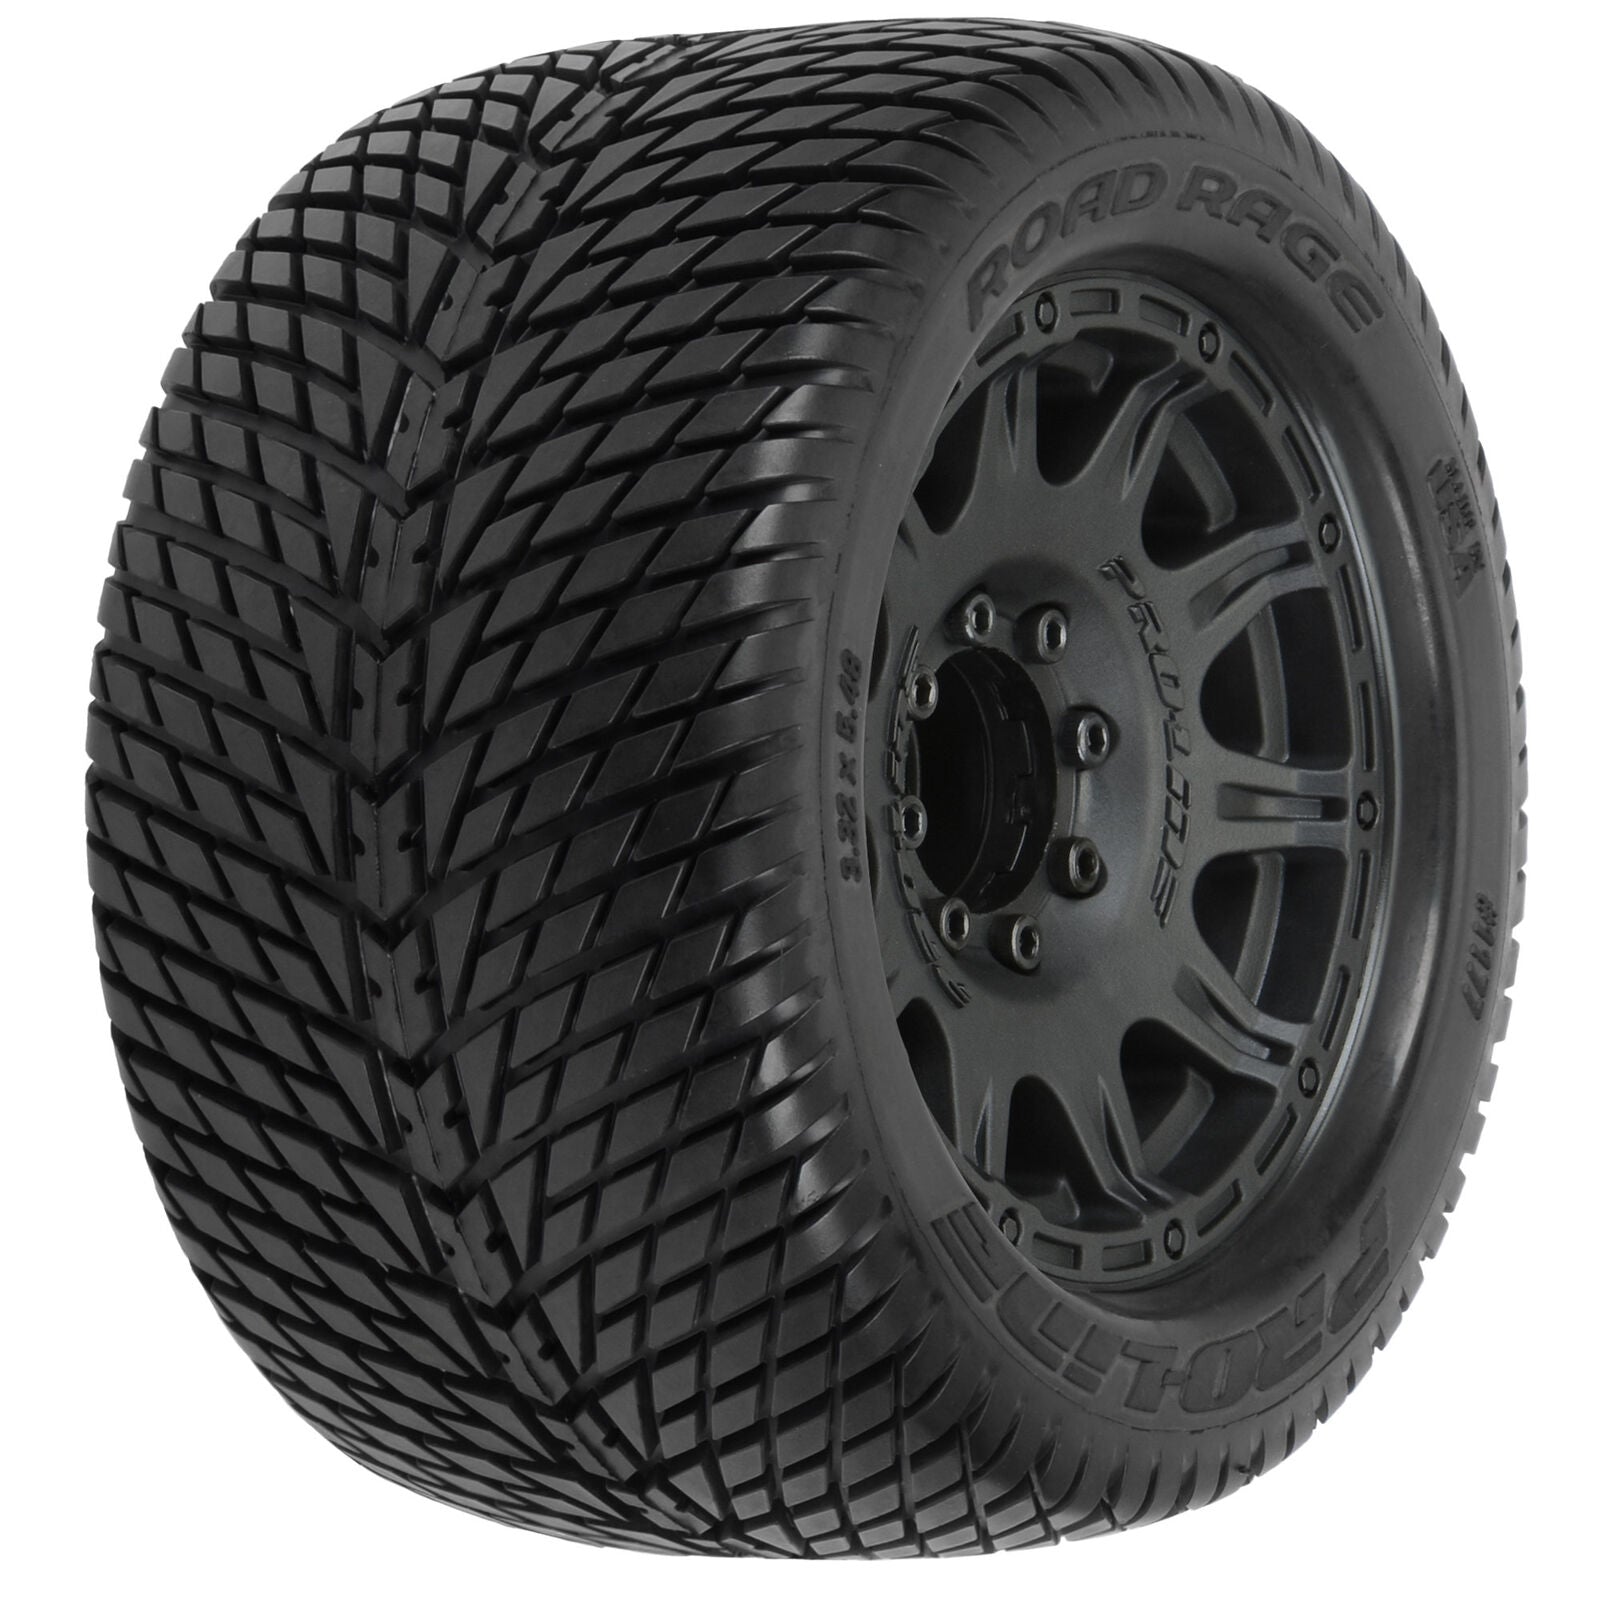 PROLINE 1177-10 1/8 Road Rage F/R 3.8" MT Tires Mounted 17mm Blk Raid (2)